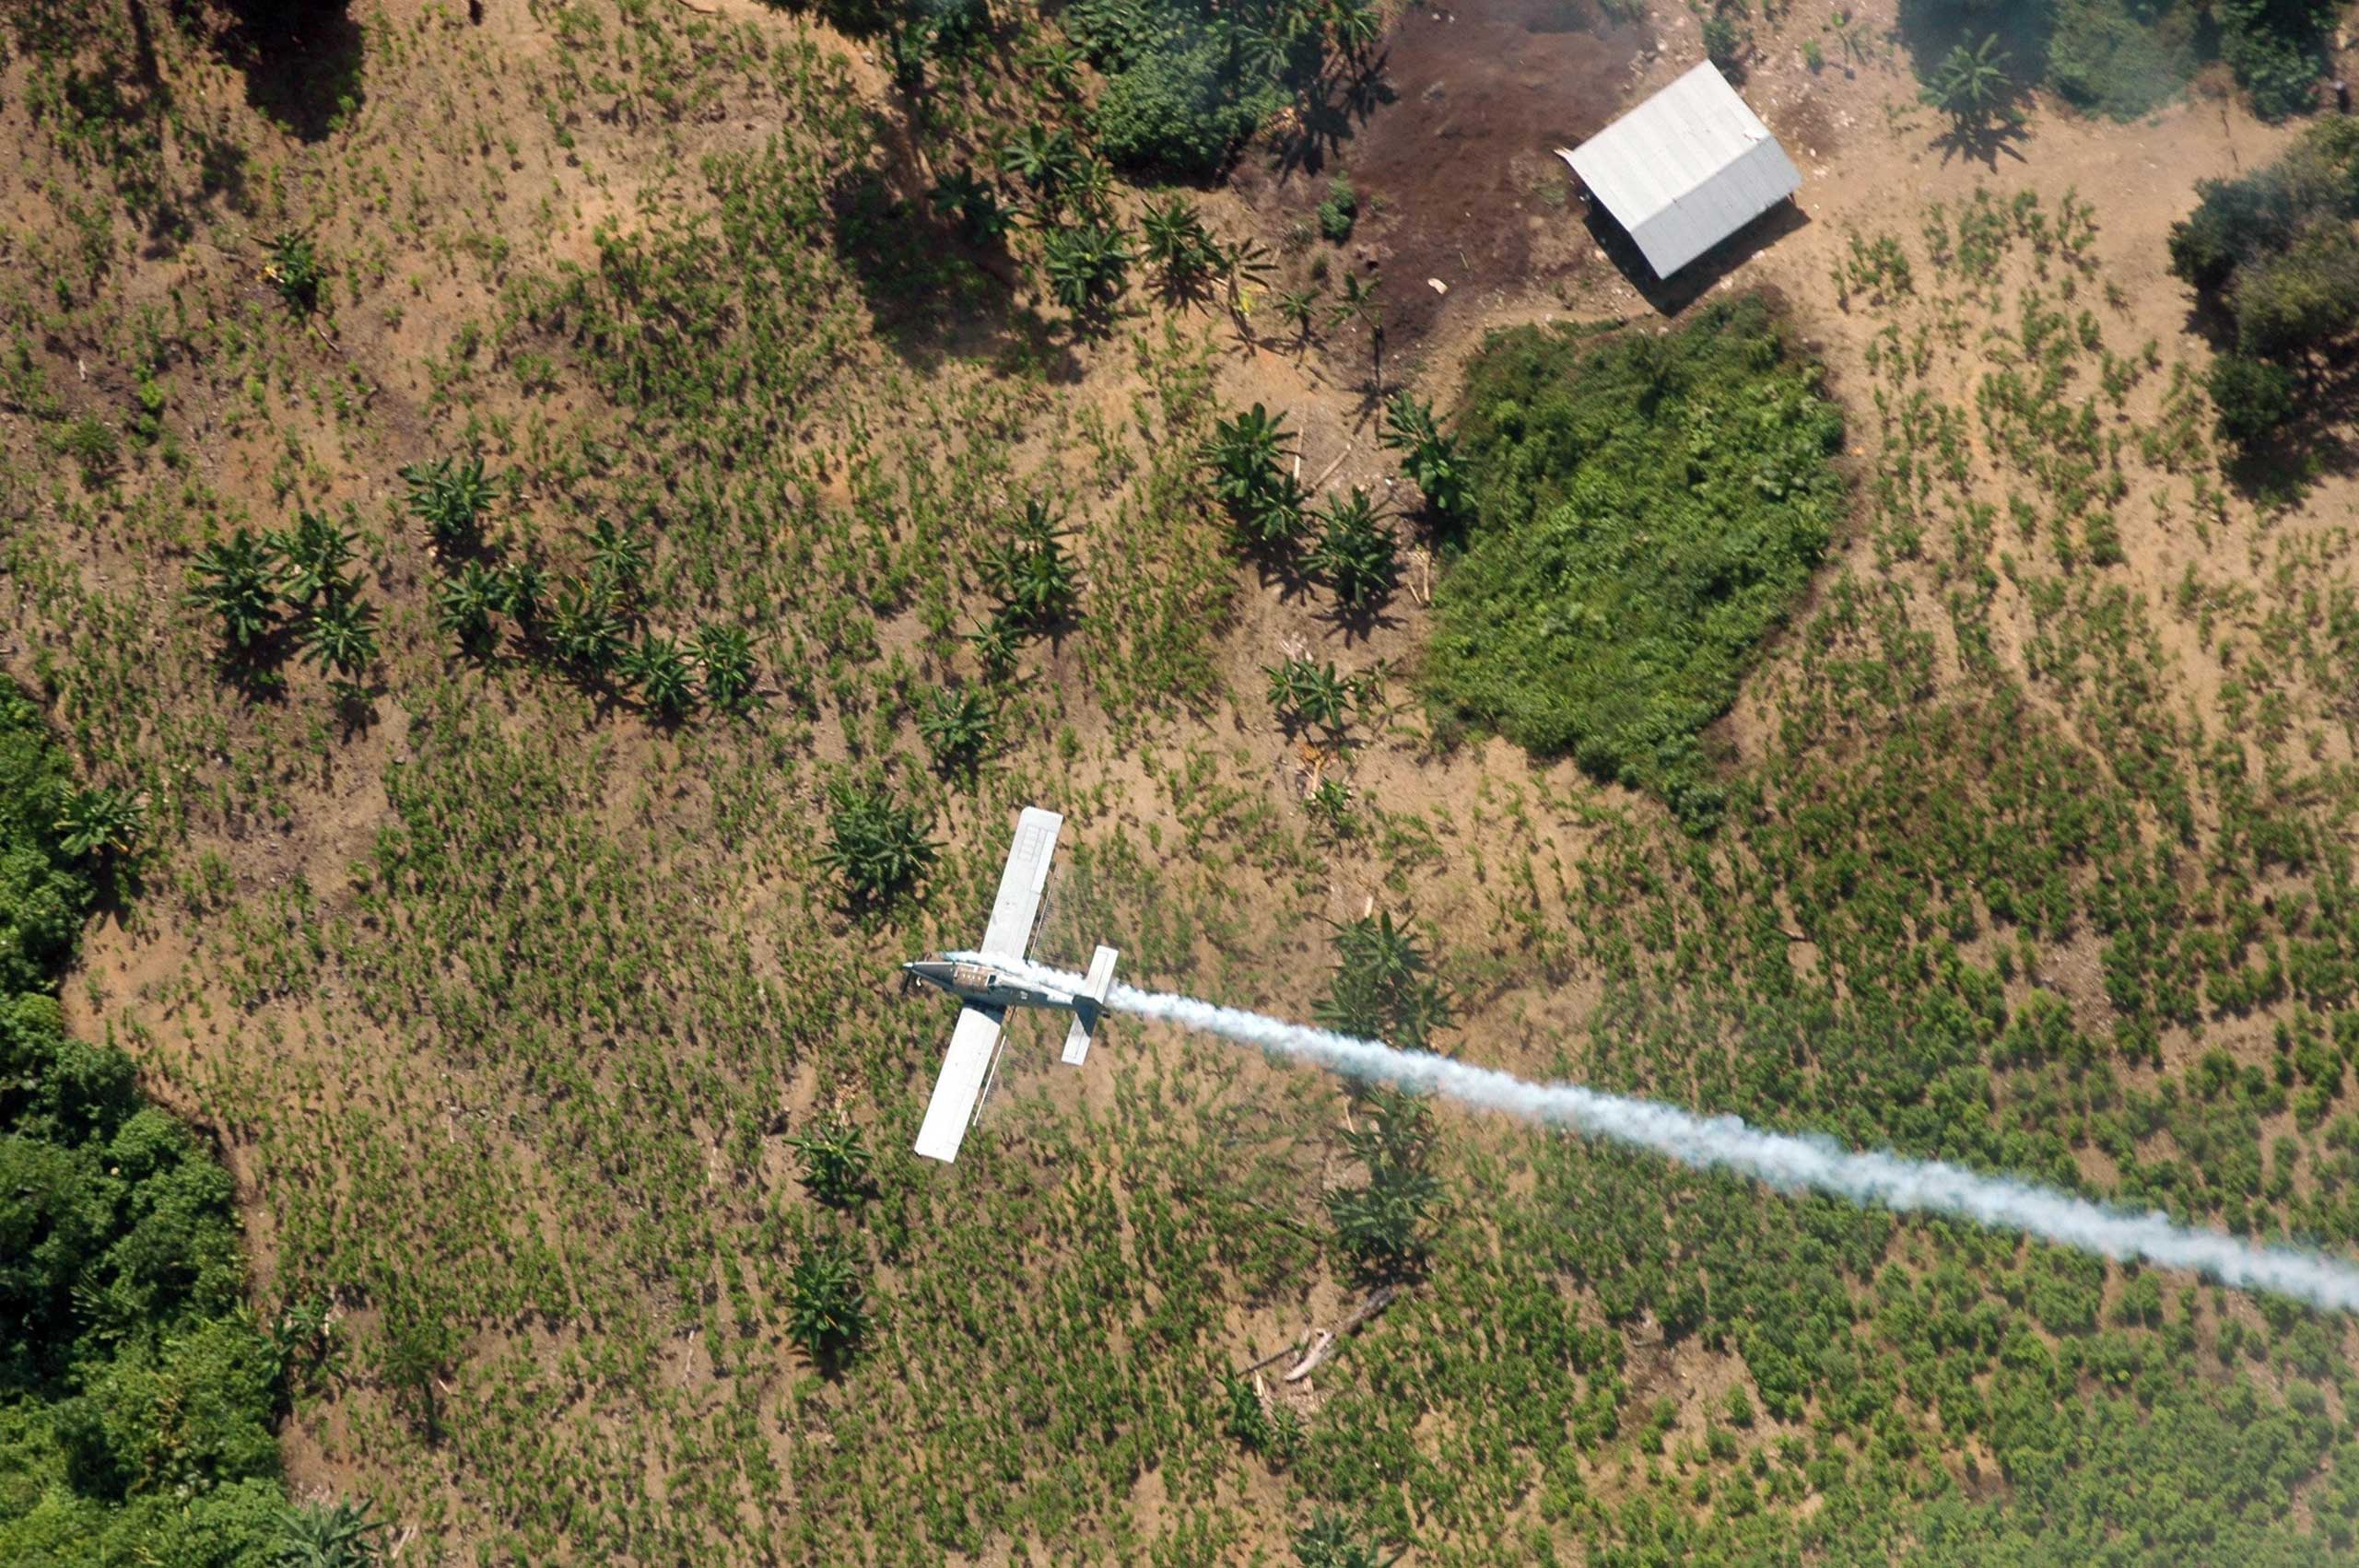 A police plane sprays herbicides over coca fields in El Tarra, in the Catatumbo river area of Colombia on June 4, 2008. (Luis Robayo—AP)